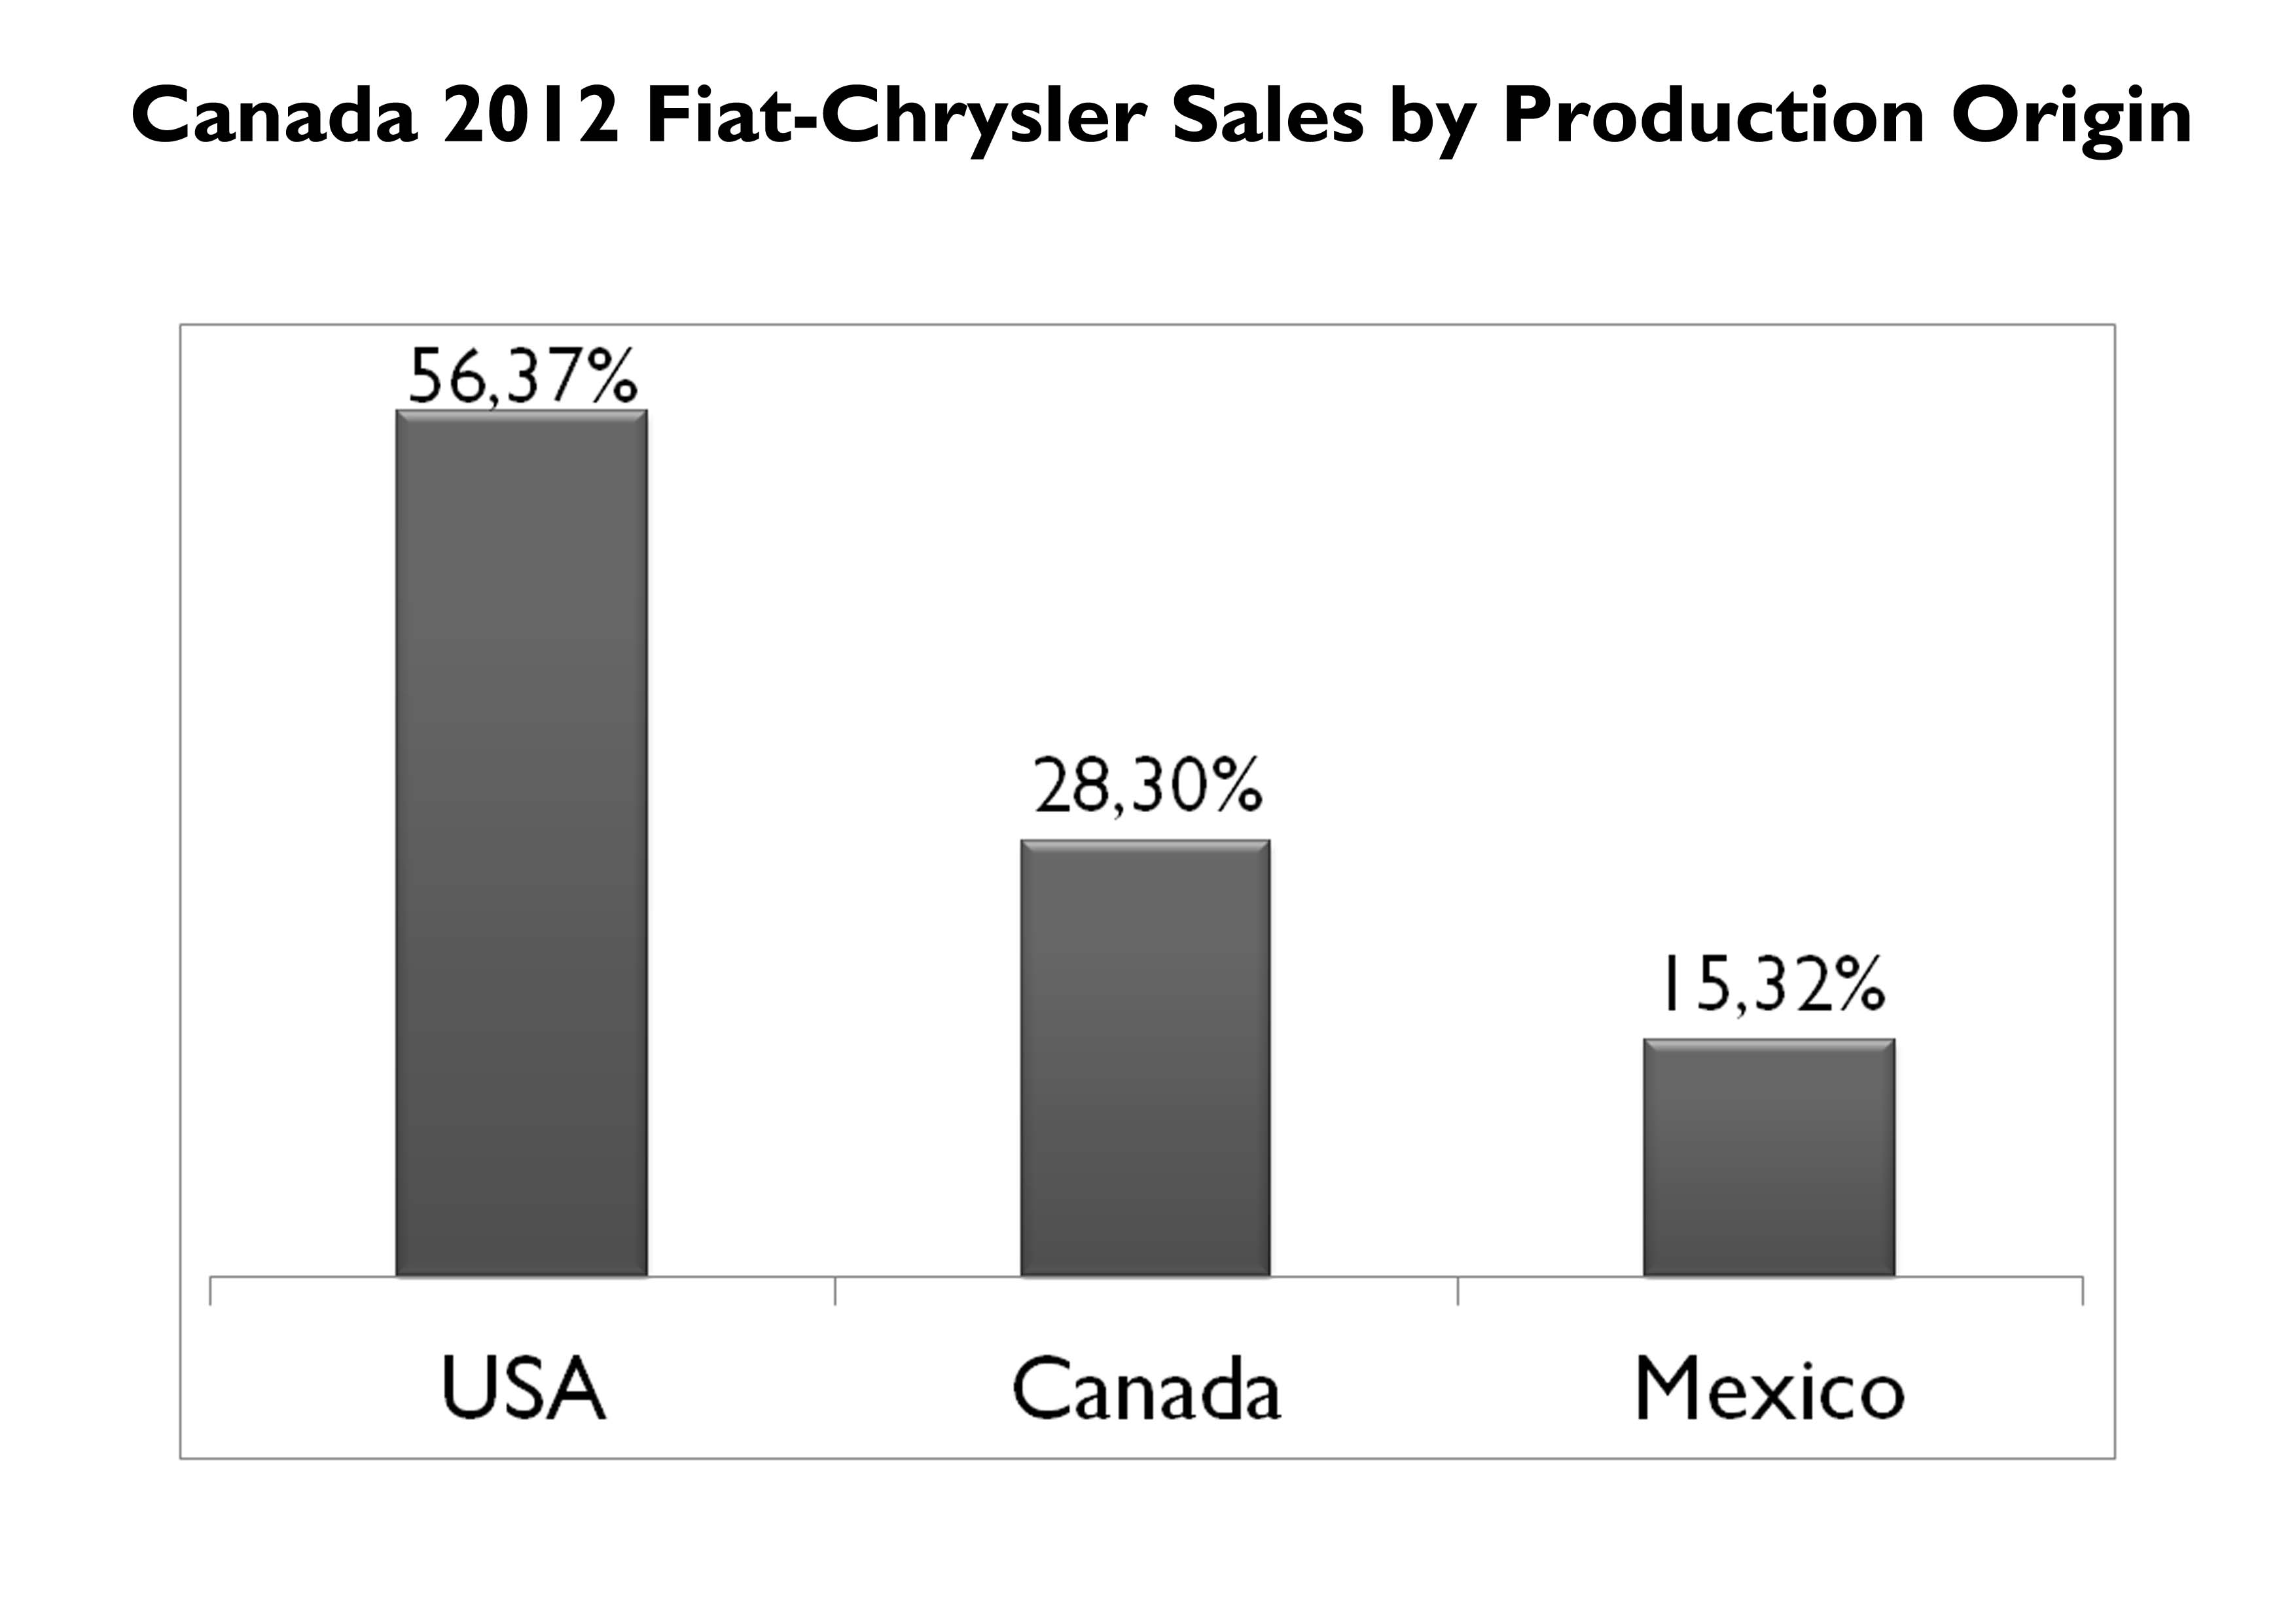 Chrysler total sales #1